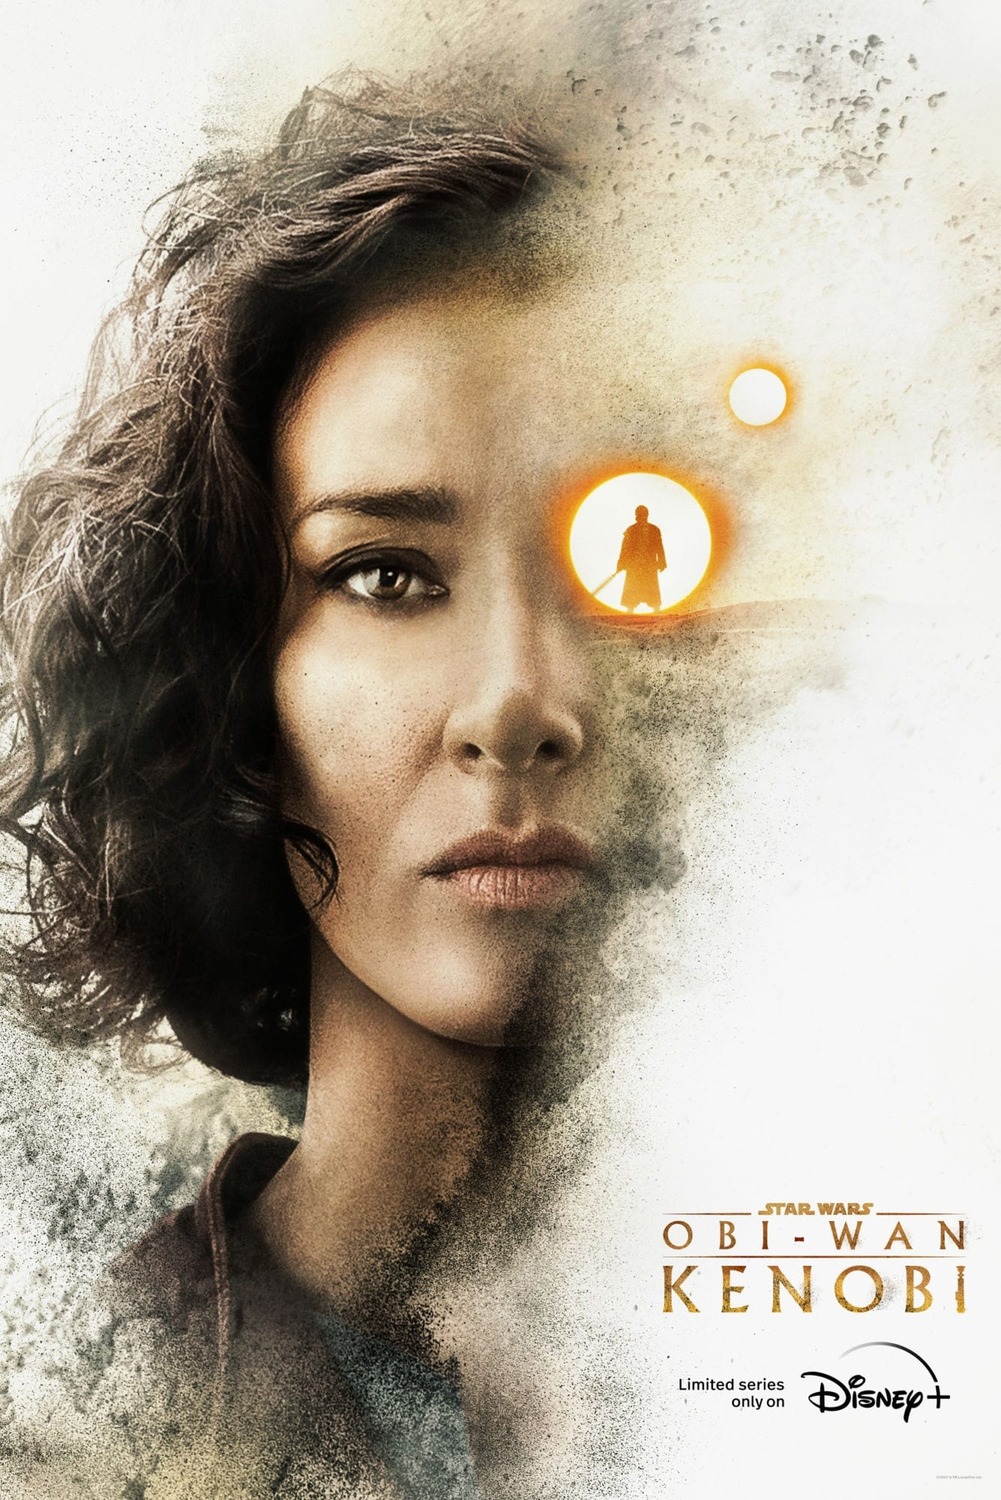 Extra Large TV Poster Image for Obi-Wan Kenobi (#10 of 15)